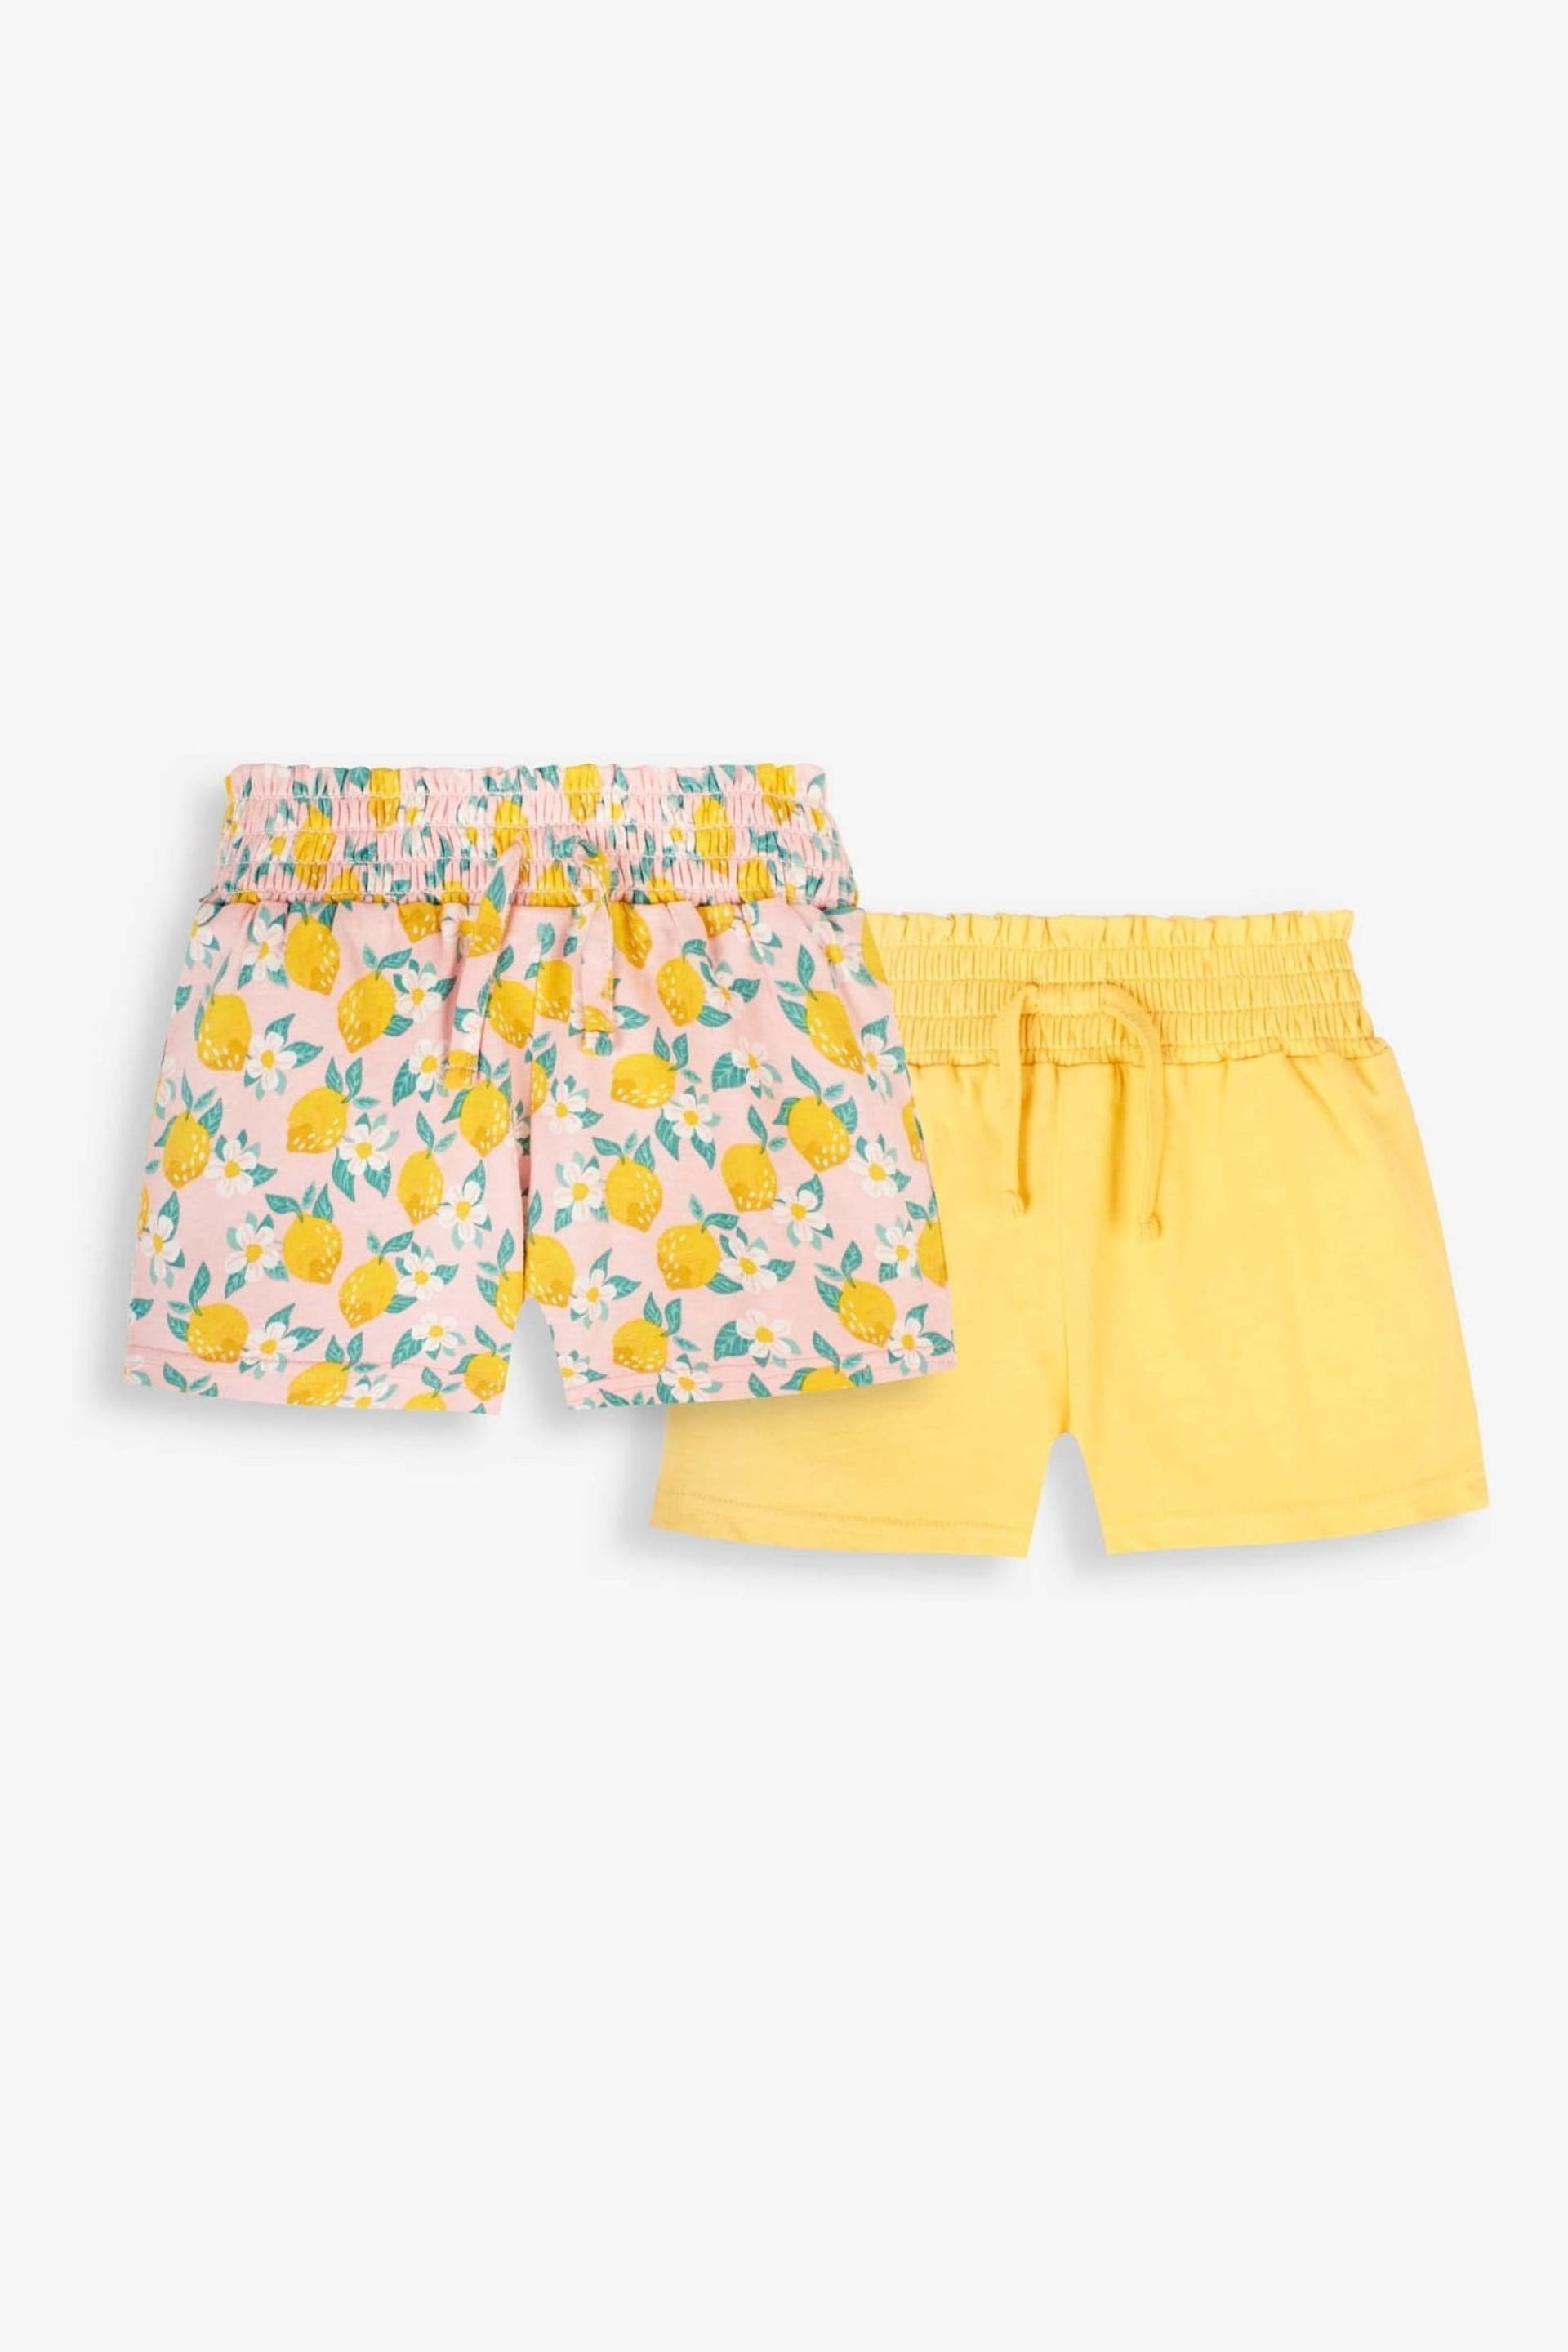 JoJo Maman Bébé Pink 2-Pack Lemon Floral Print & Yellow Pretty Shorts - Image 1 of 8